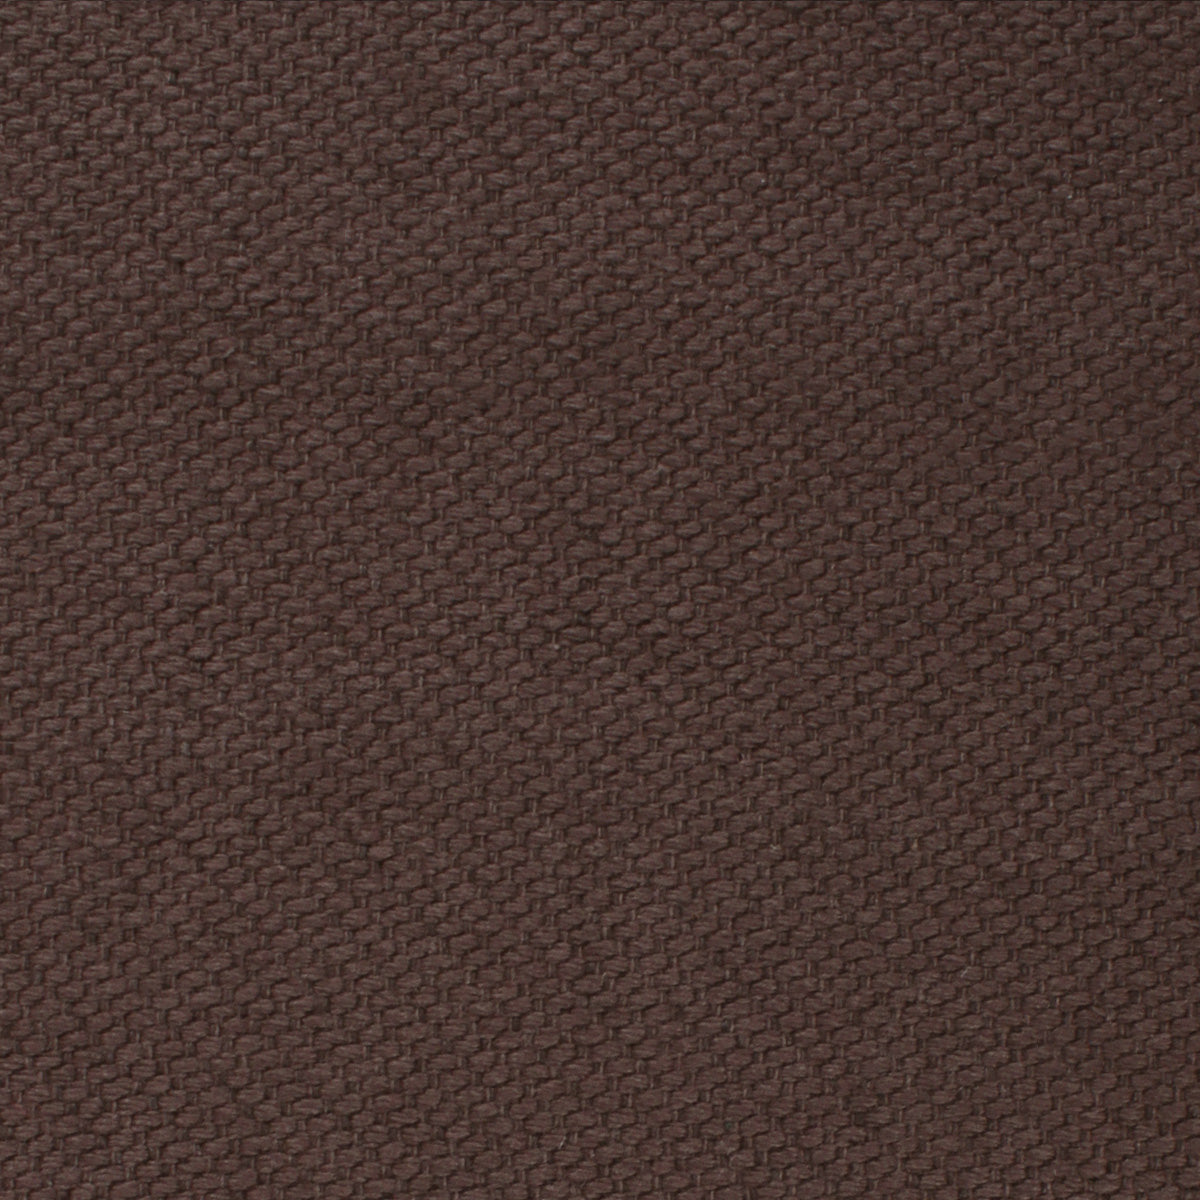 Dark Brown Truffle Linen Pocket Square Fabric